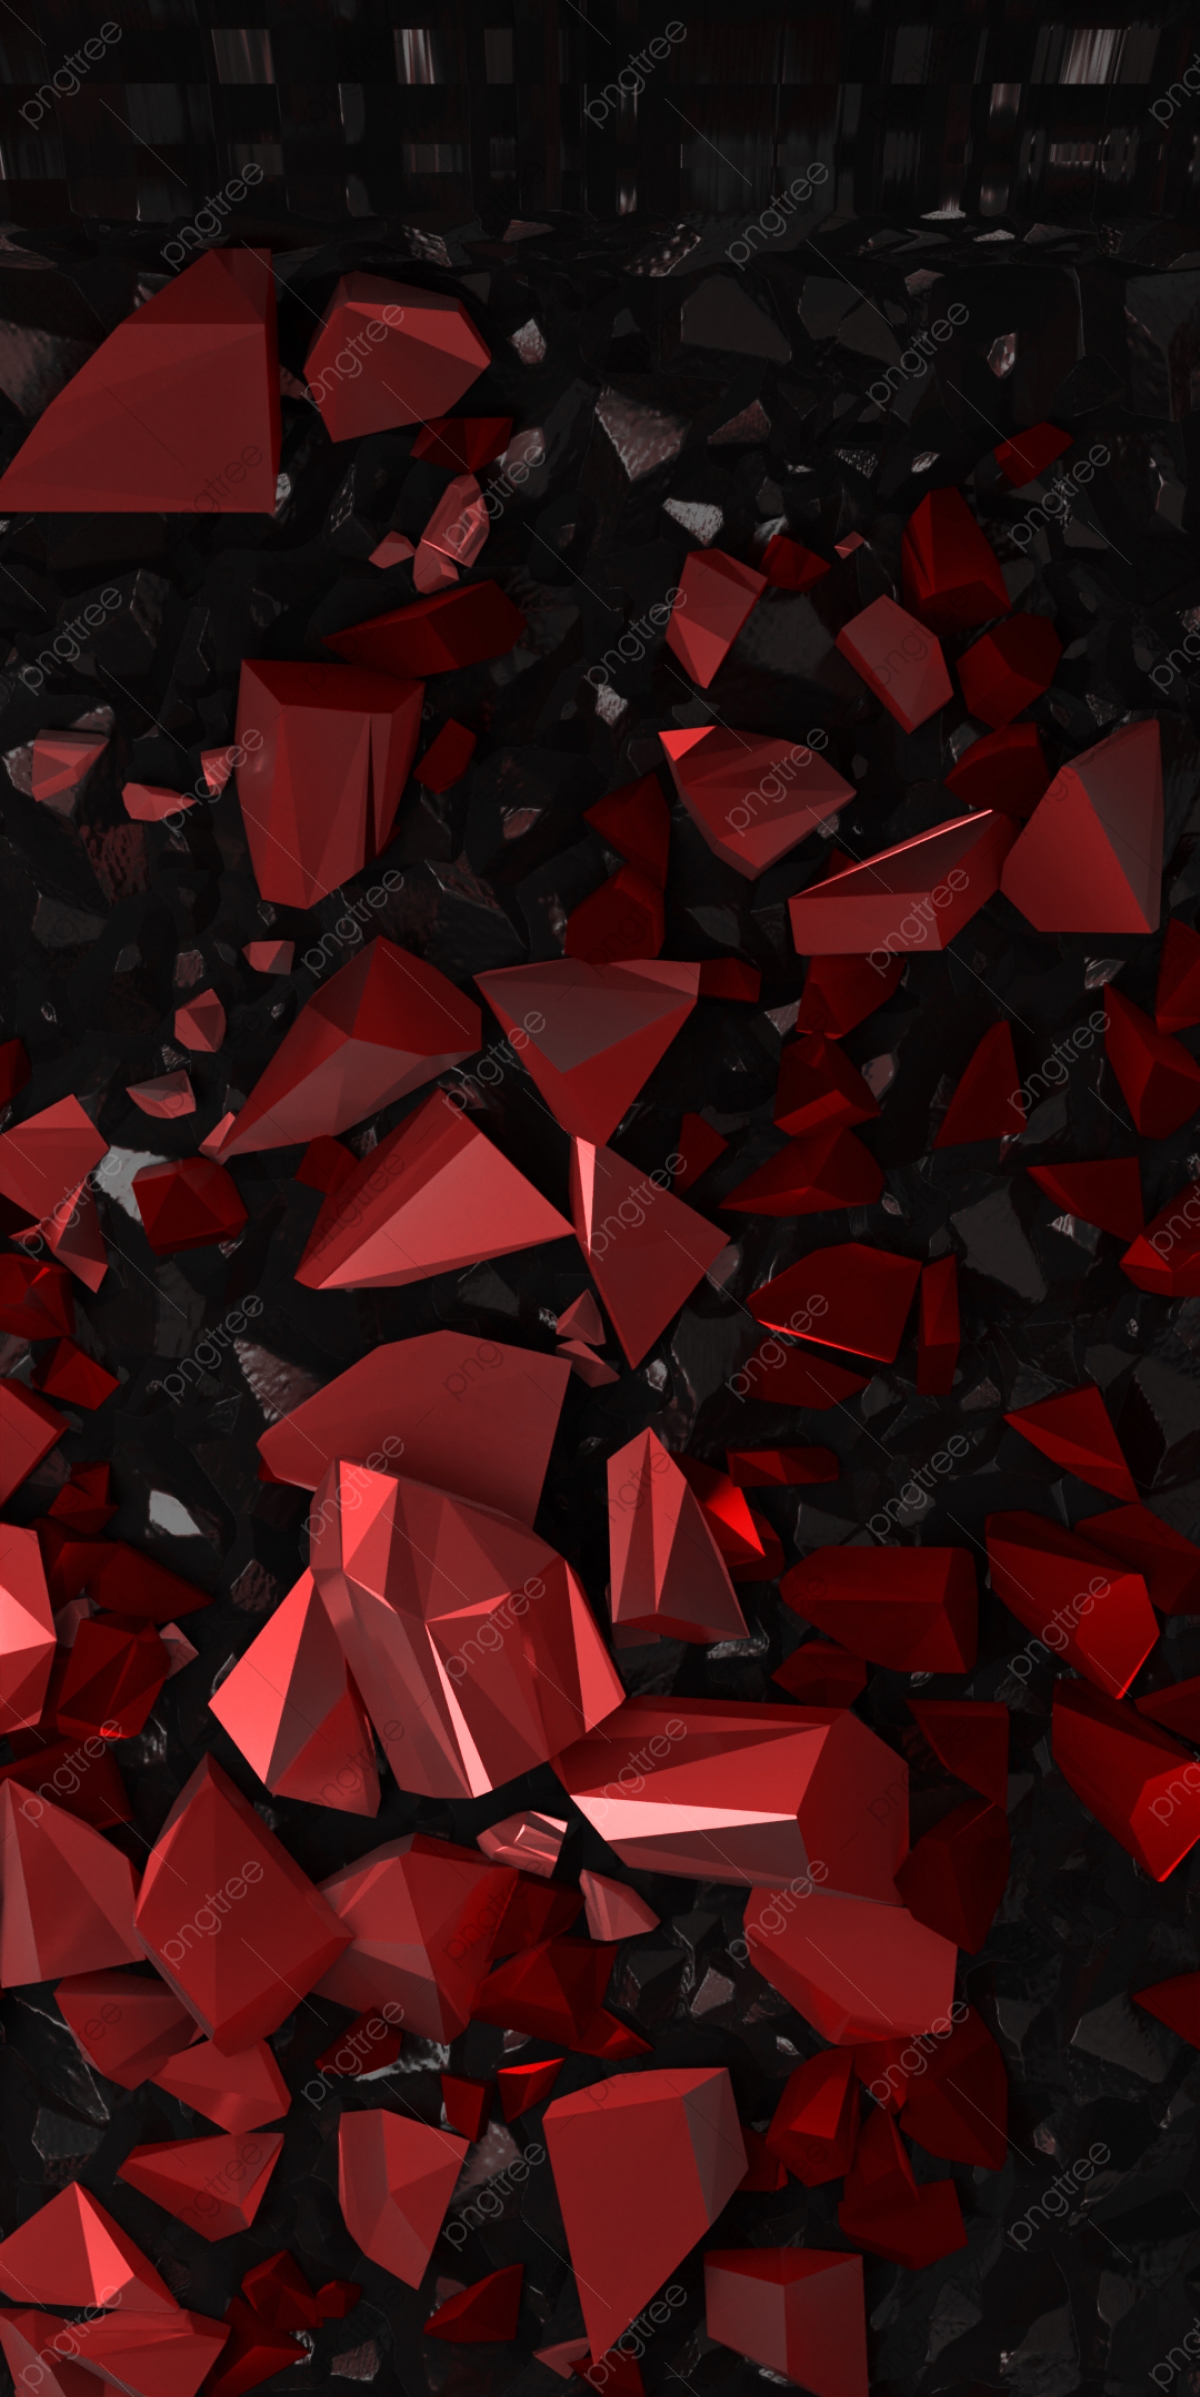 Crystal Background Red Shiny Gem On Black Surface, Surface, Business, Illustration Background Image for Free Download